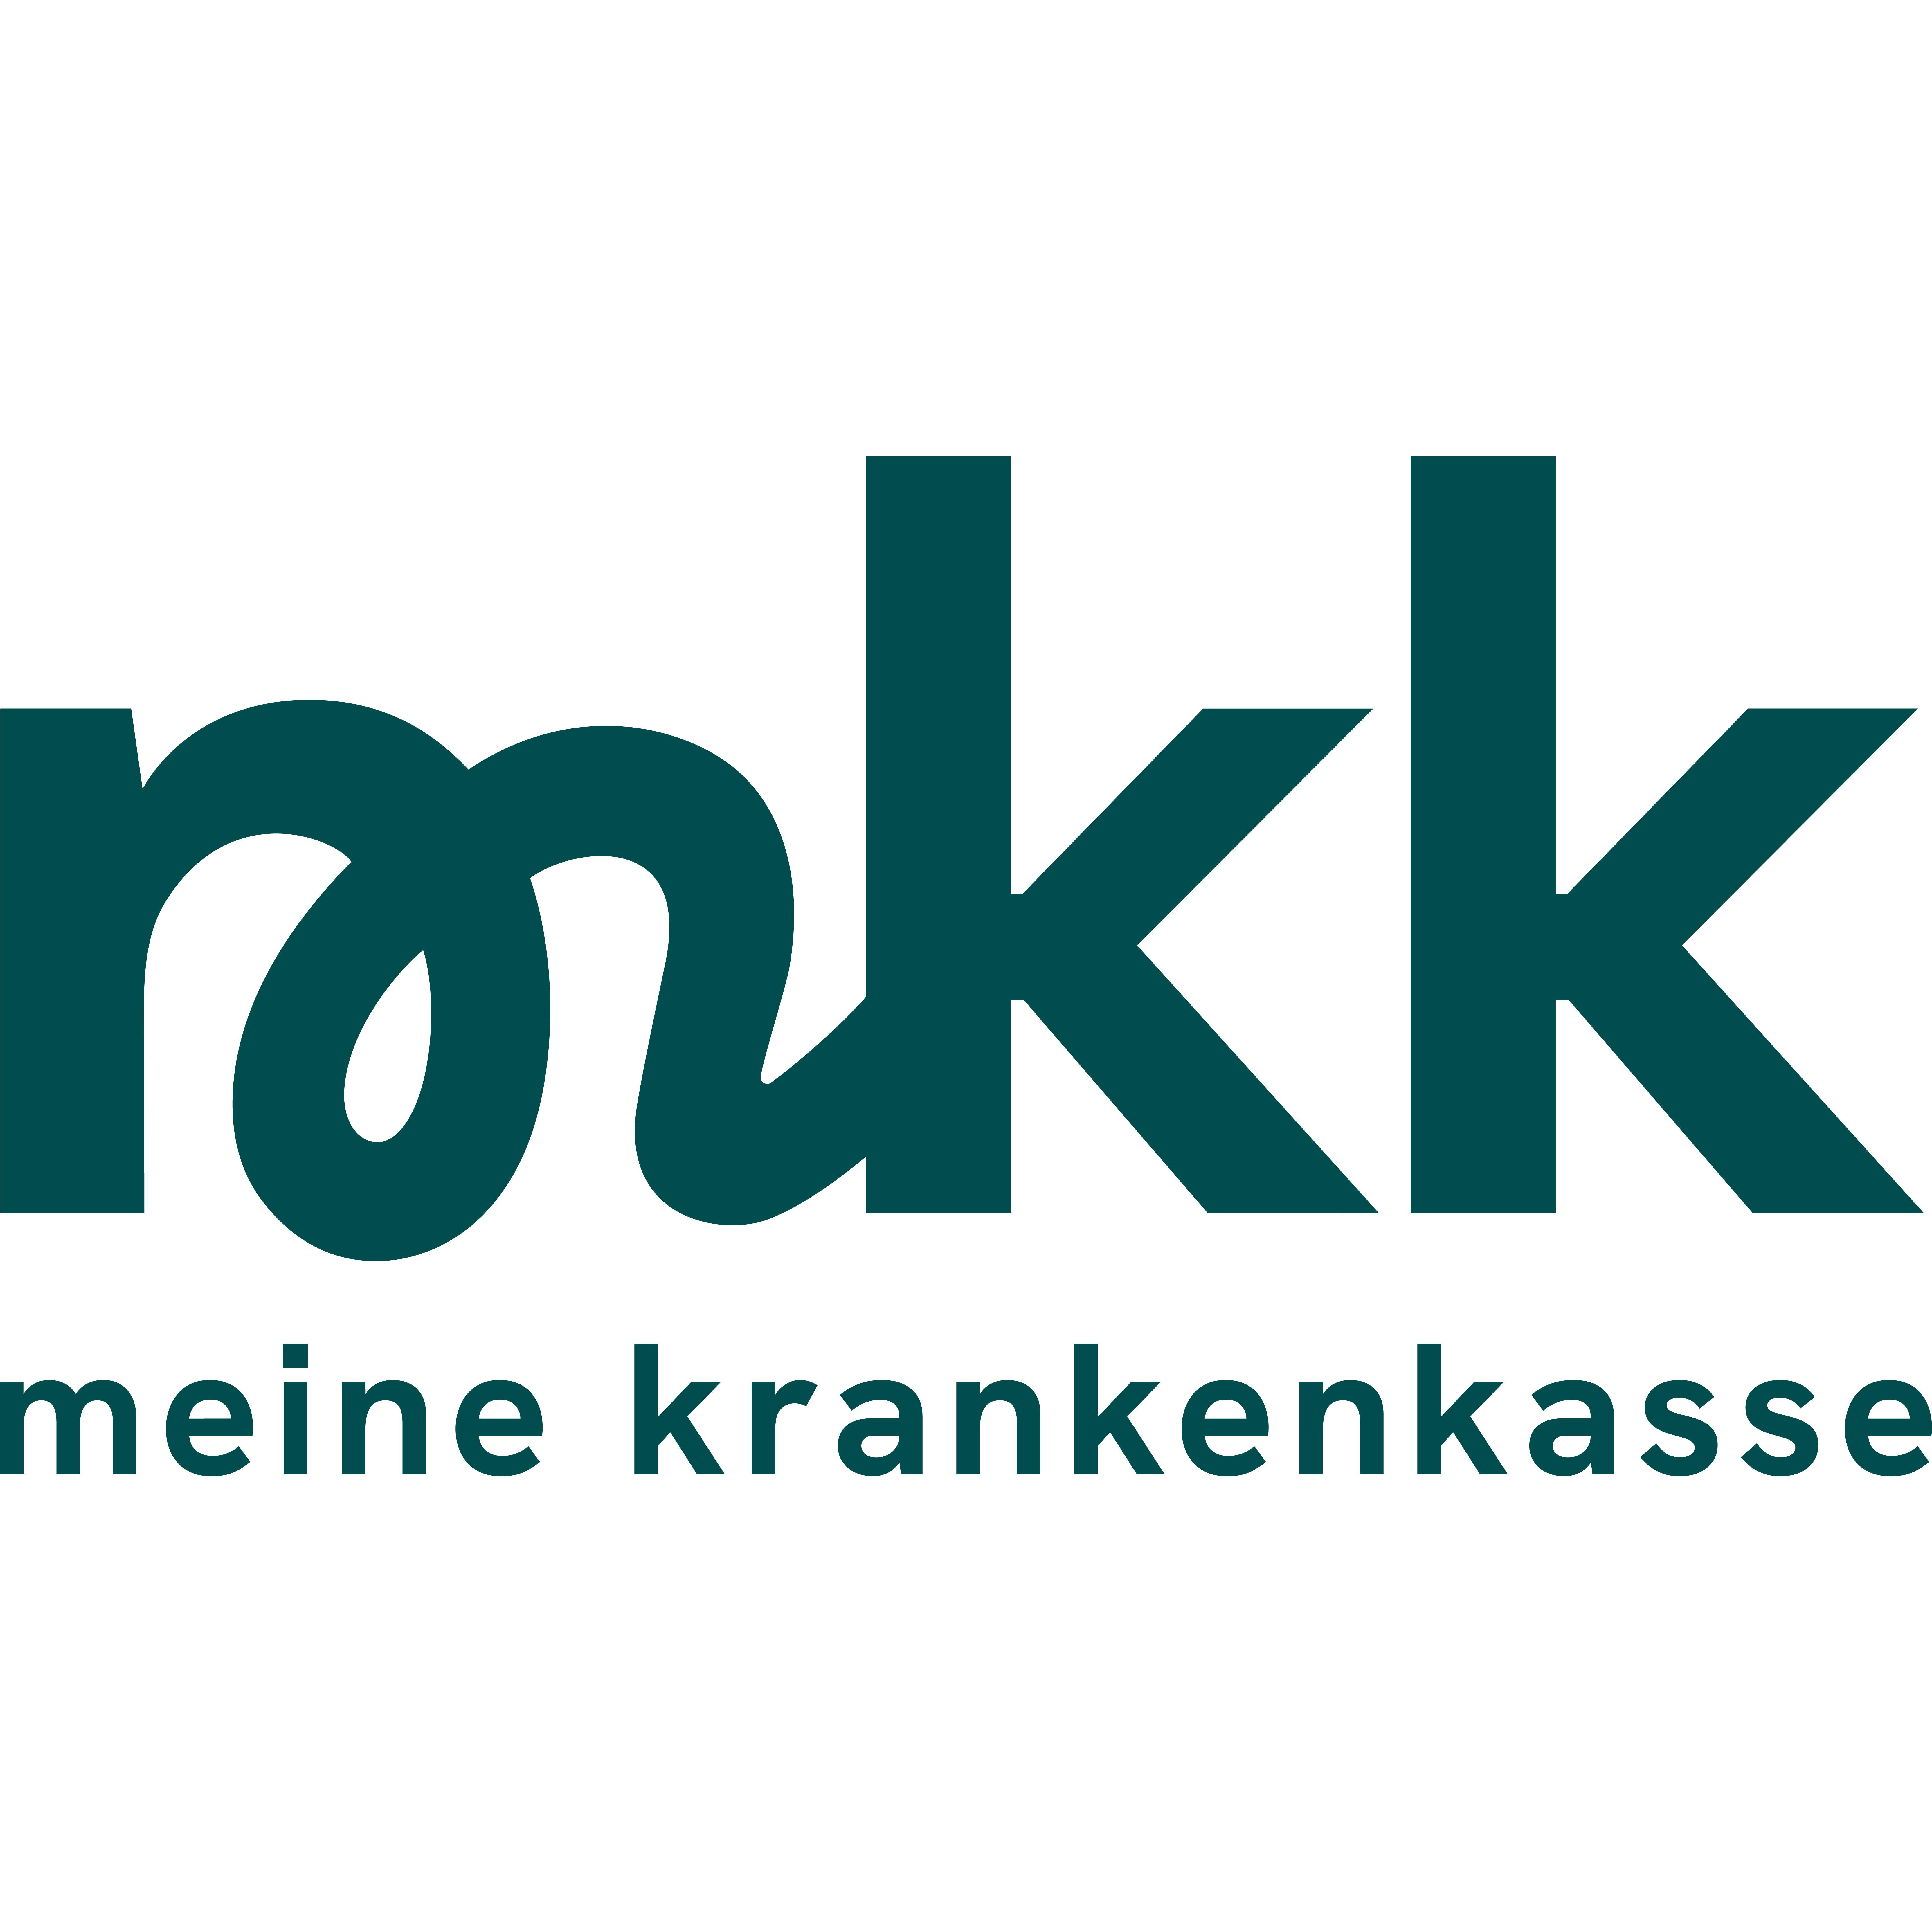 mkk - meine krankenkasse in Bochum - Logo